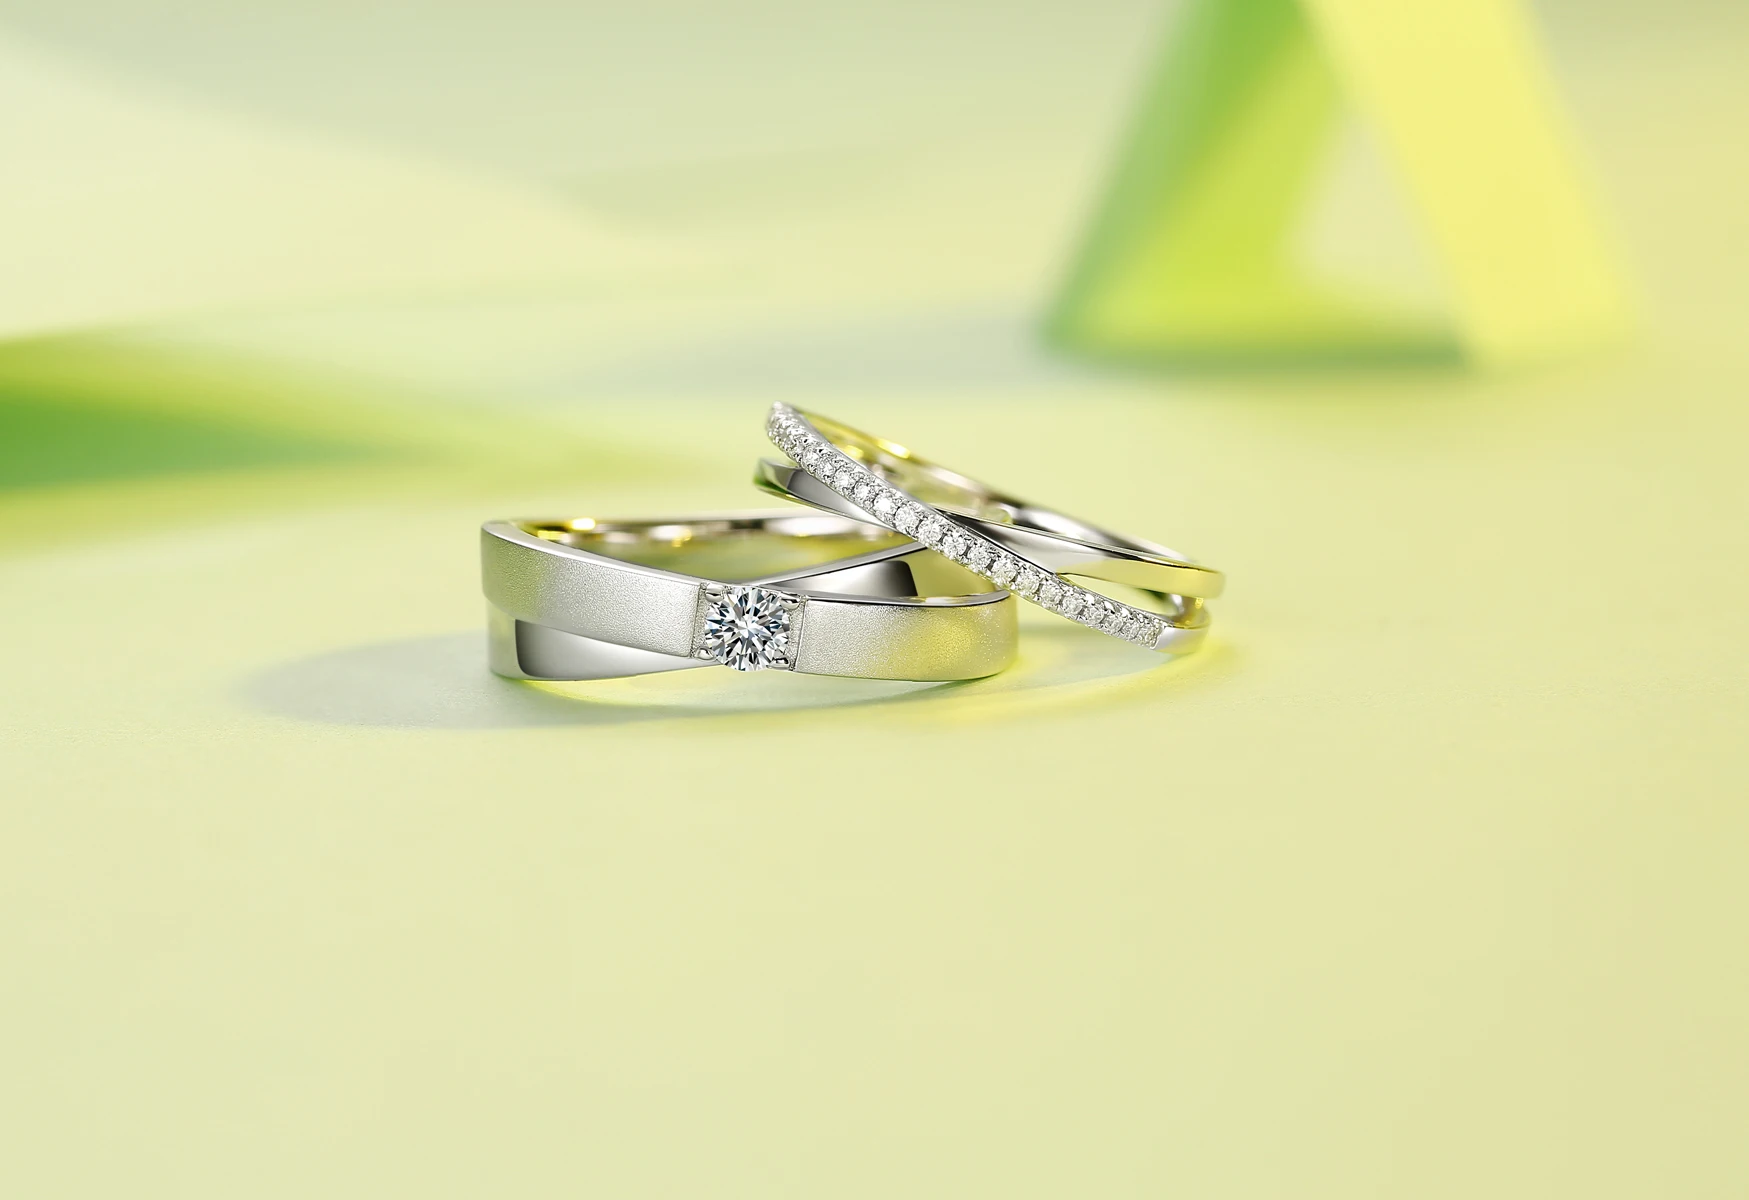 women ladies custom jewelry 925 sterling silver lab grown diamond anniversary rings for wedding rings set couple engagement